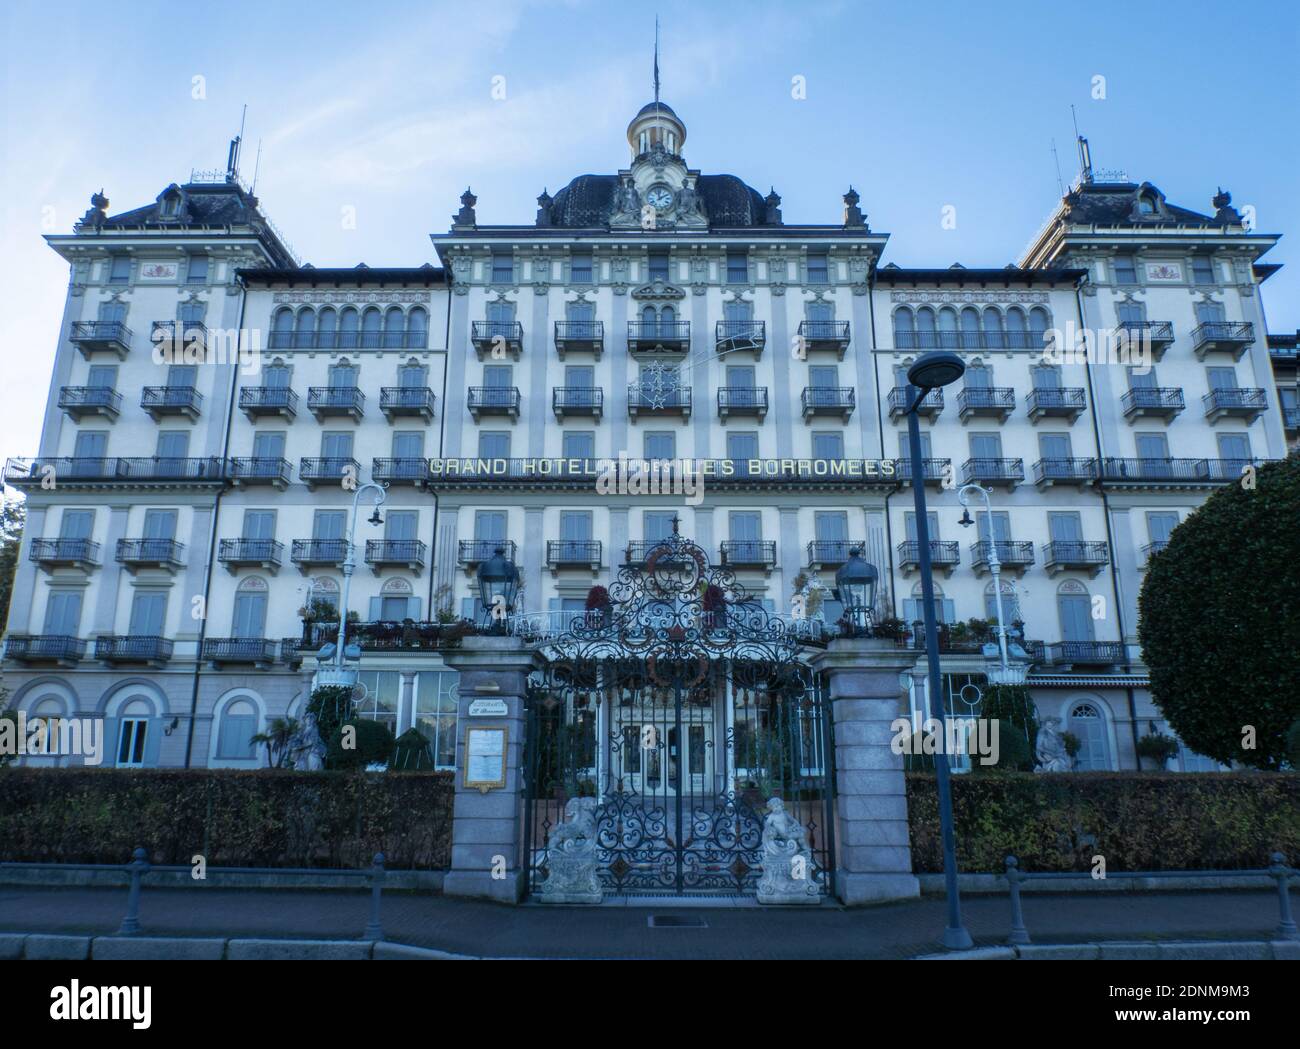 Grand Hotel Des Iles Borromees during the winter season closing.Stresa, Lake maggiore,Italian Lakes,Italy Stock Photo